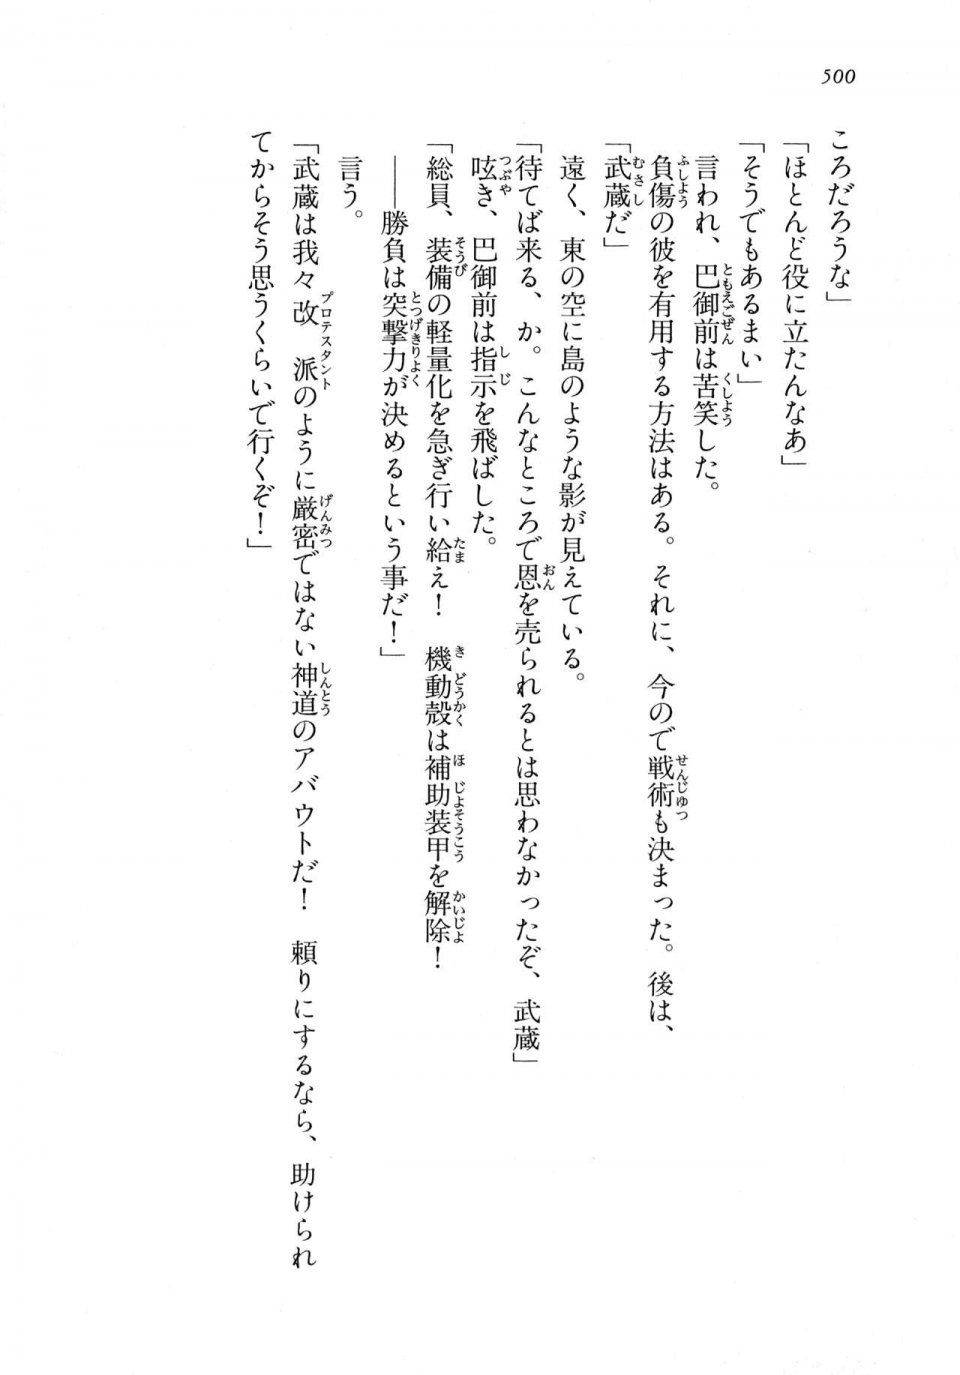 Kyoukai Senjou no Horizon LN Vol 18(7C) Part 1 - Photo #500